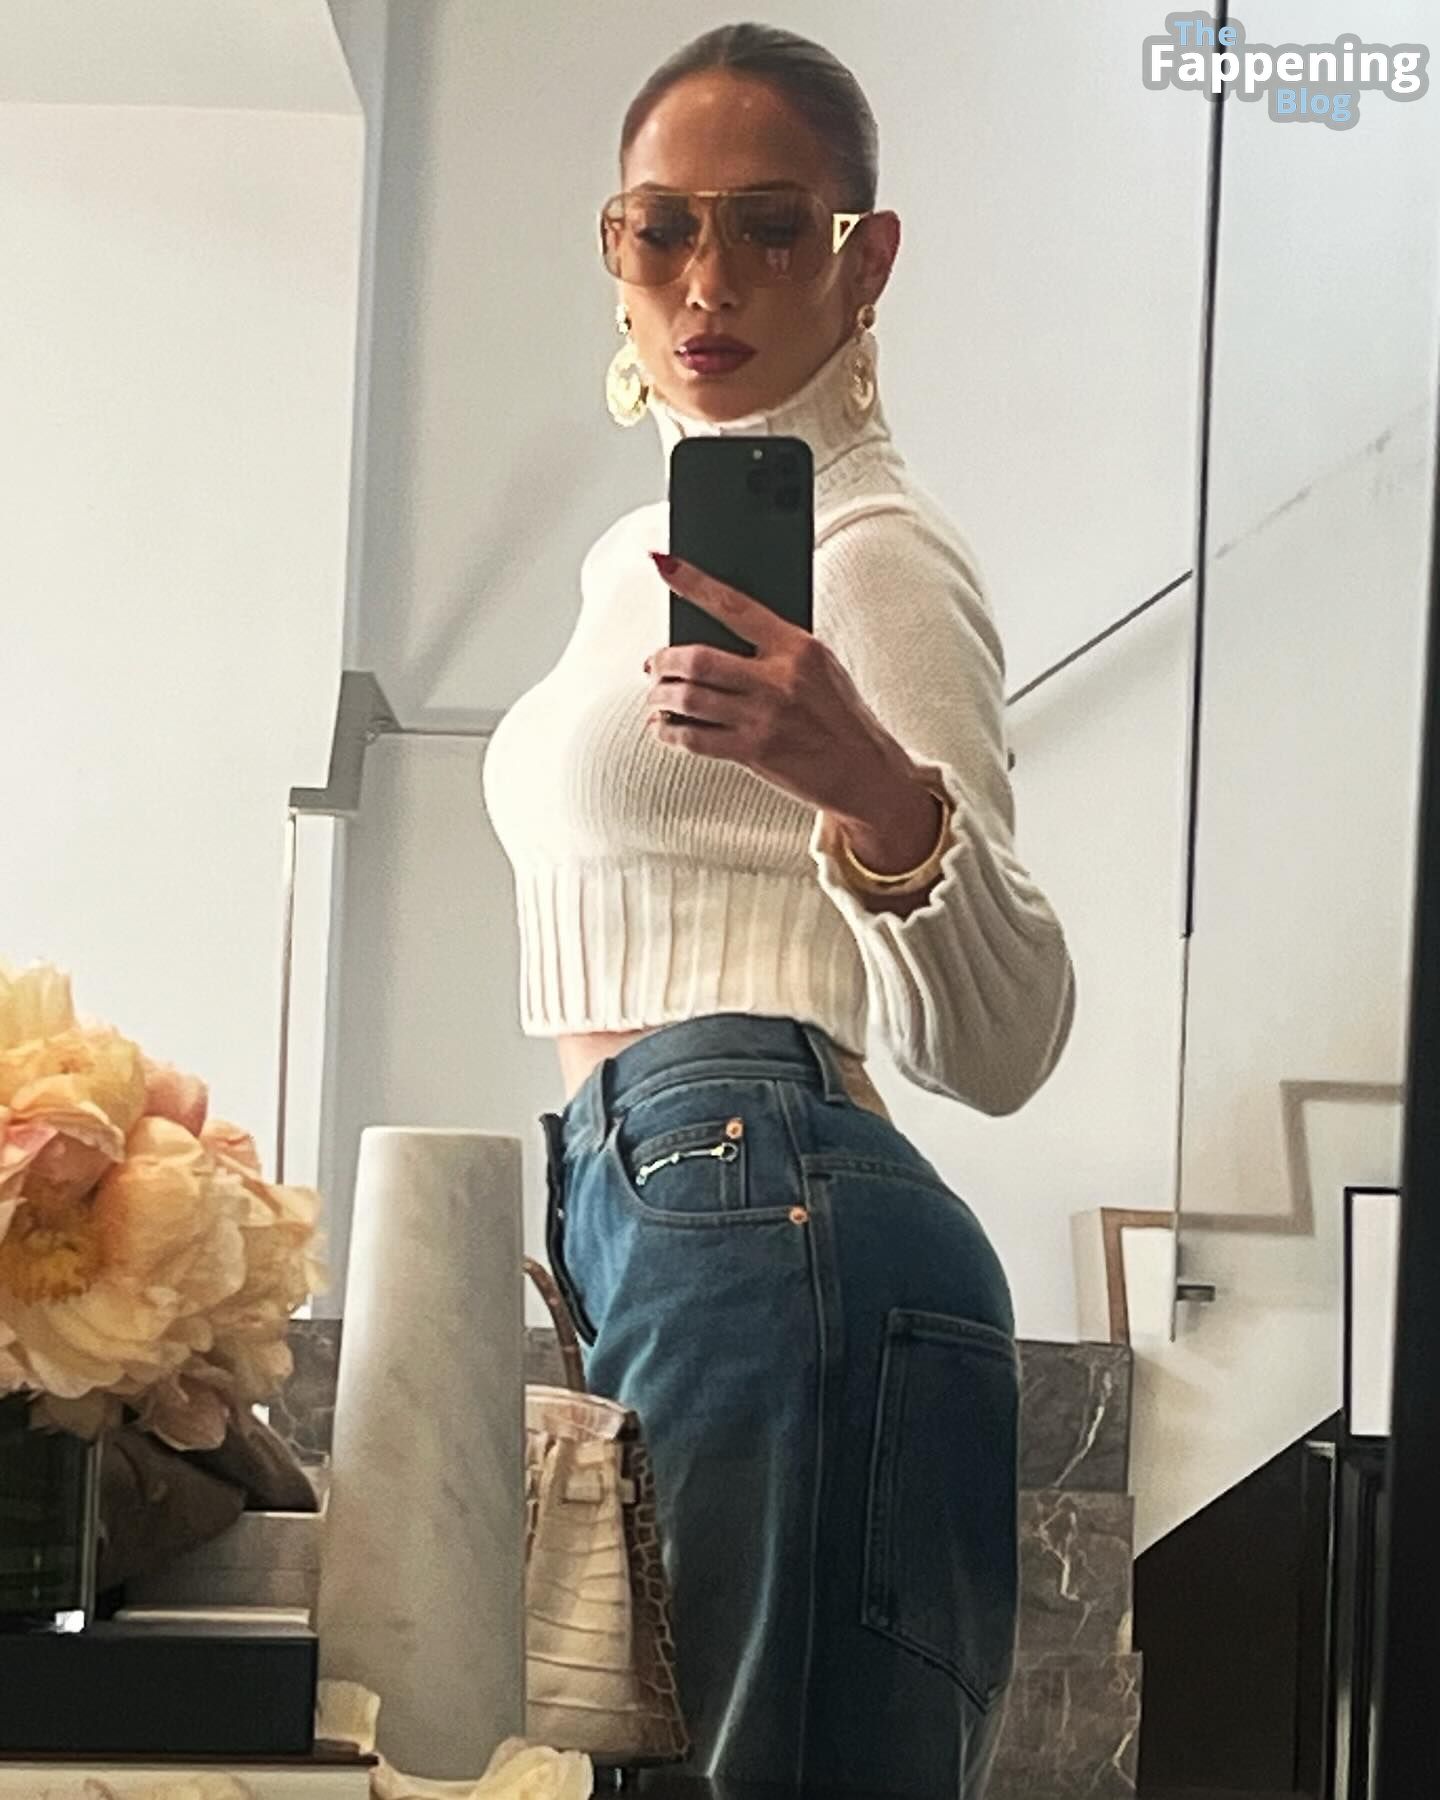 Jennifer-Lopez-Sexy-1-The-Fappening-Blog.jpg